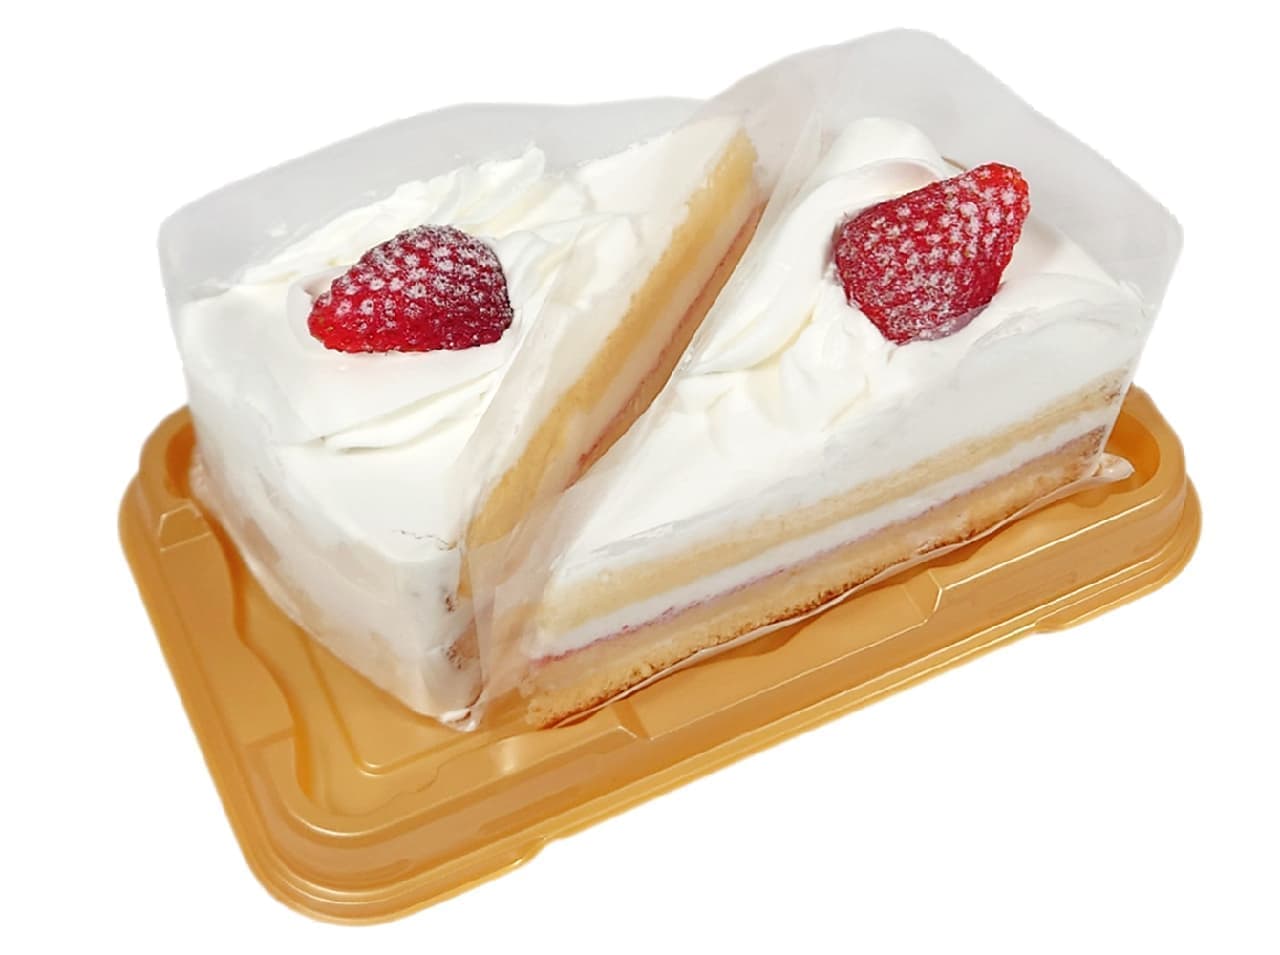 7-ELEVEN "7 Premium Strawberry Shortcake 2-pack